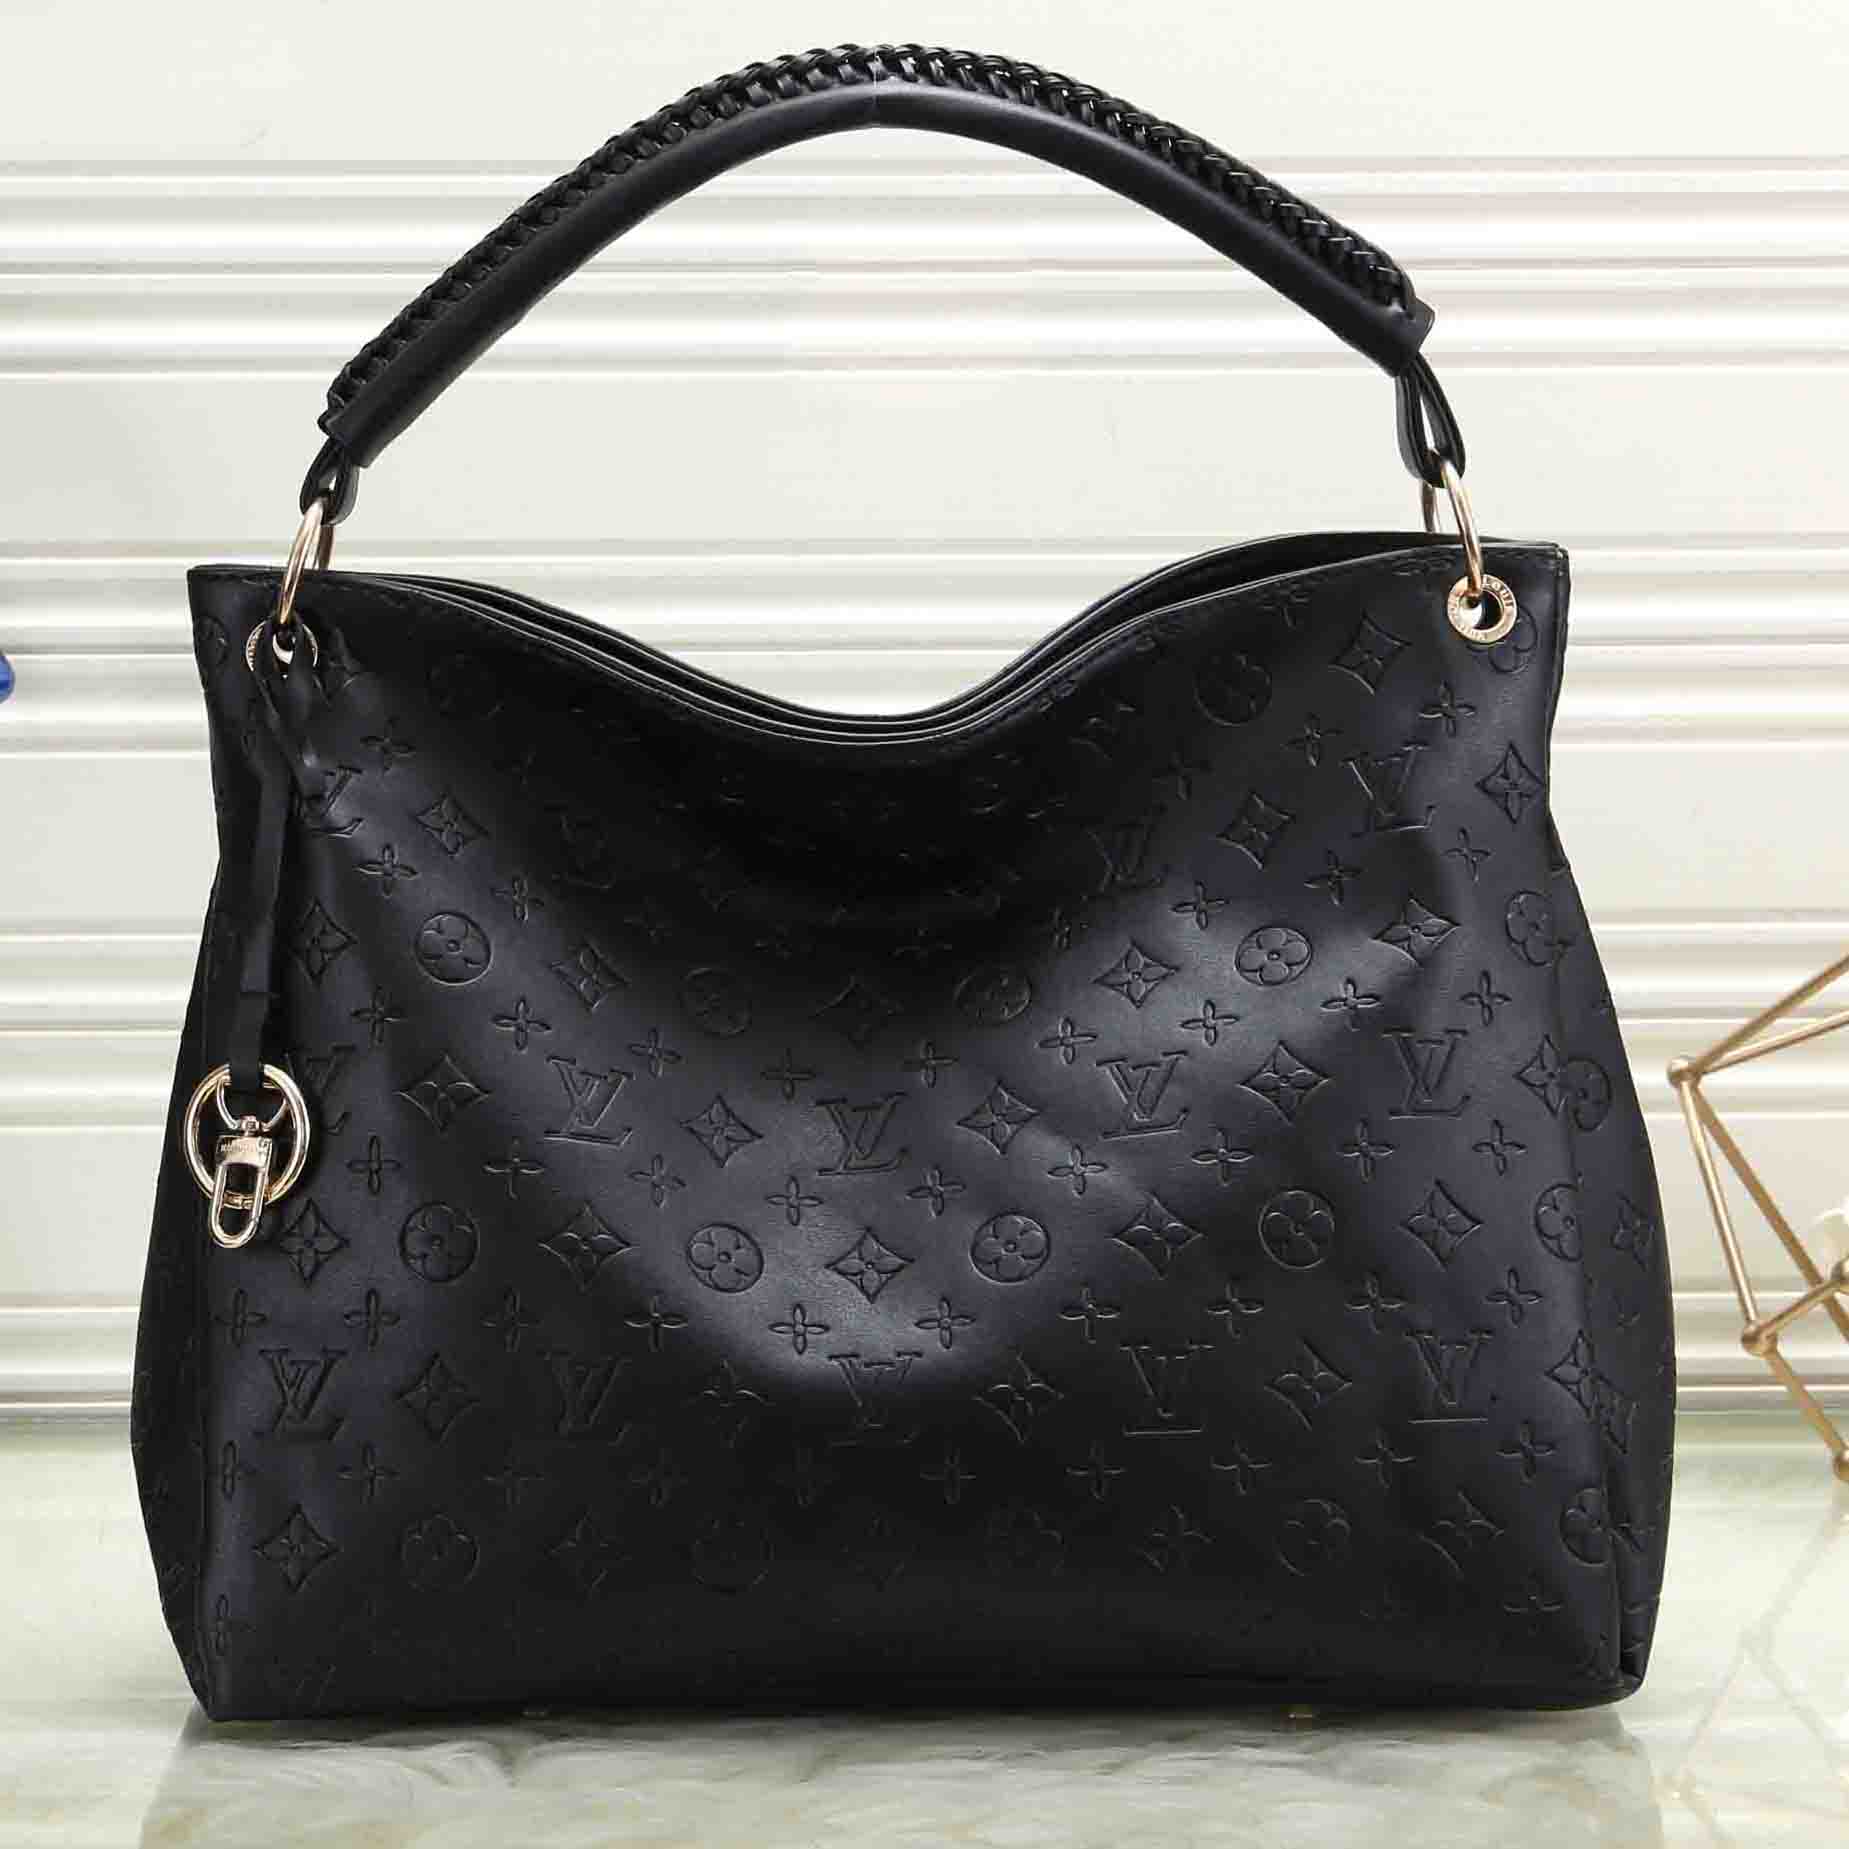 LV Louis Vuitton classic embossed letters solid color ladies shopping shoulder bag messenger bag